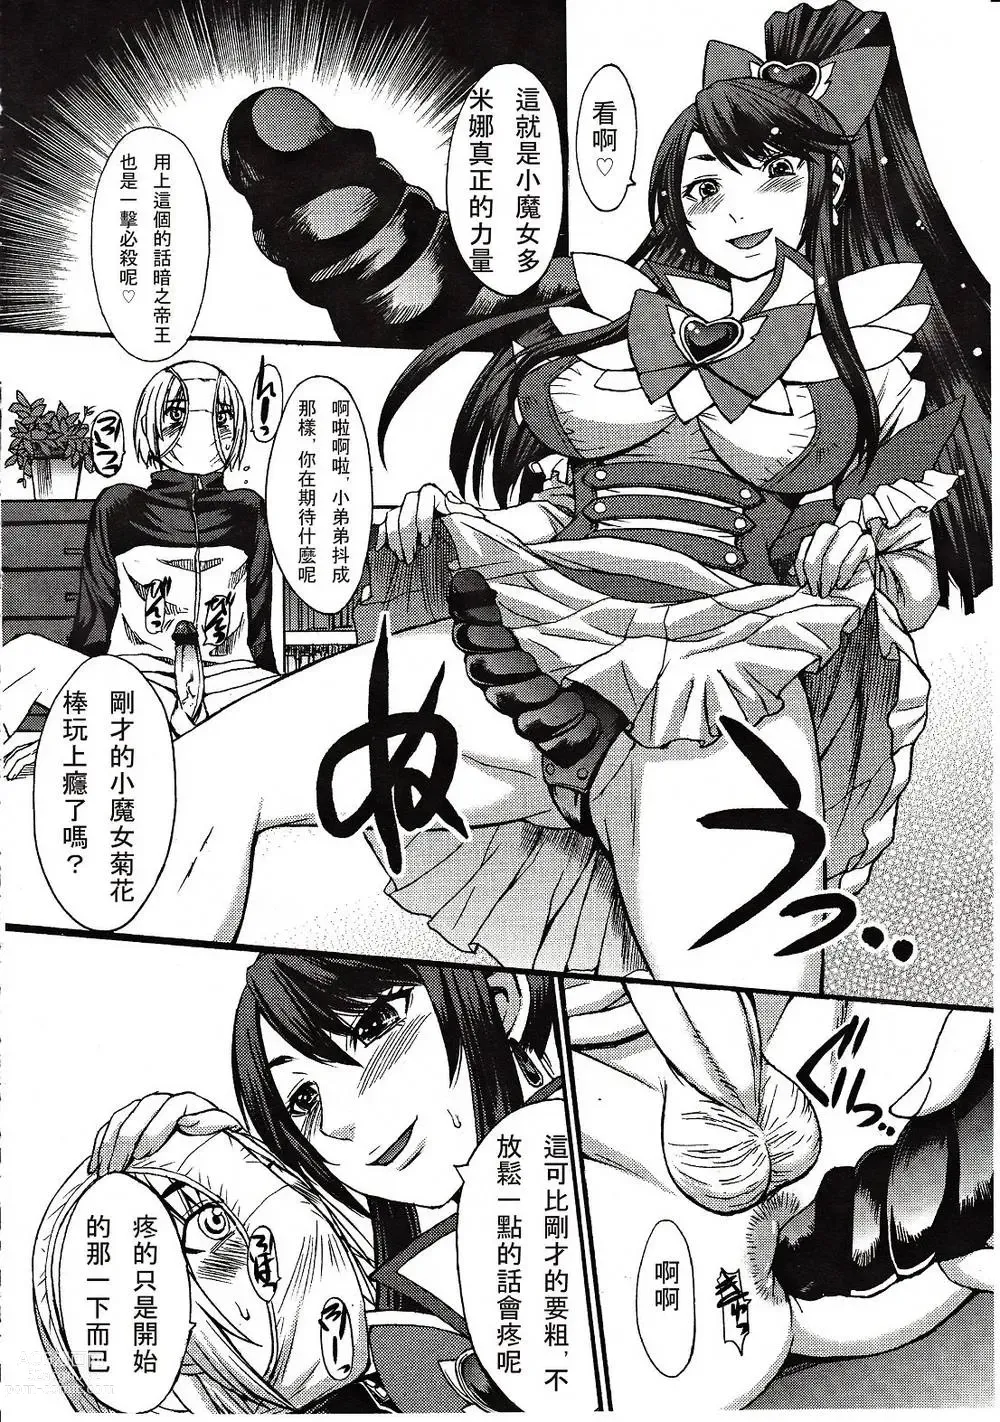 Page 254 of manga Aisarete Miru?